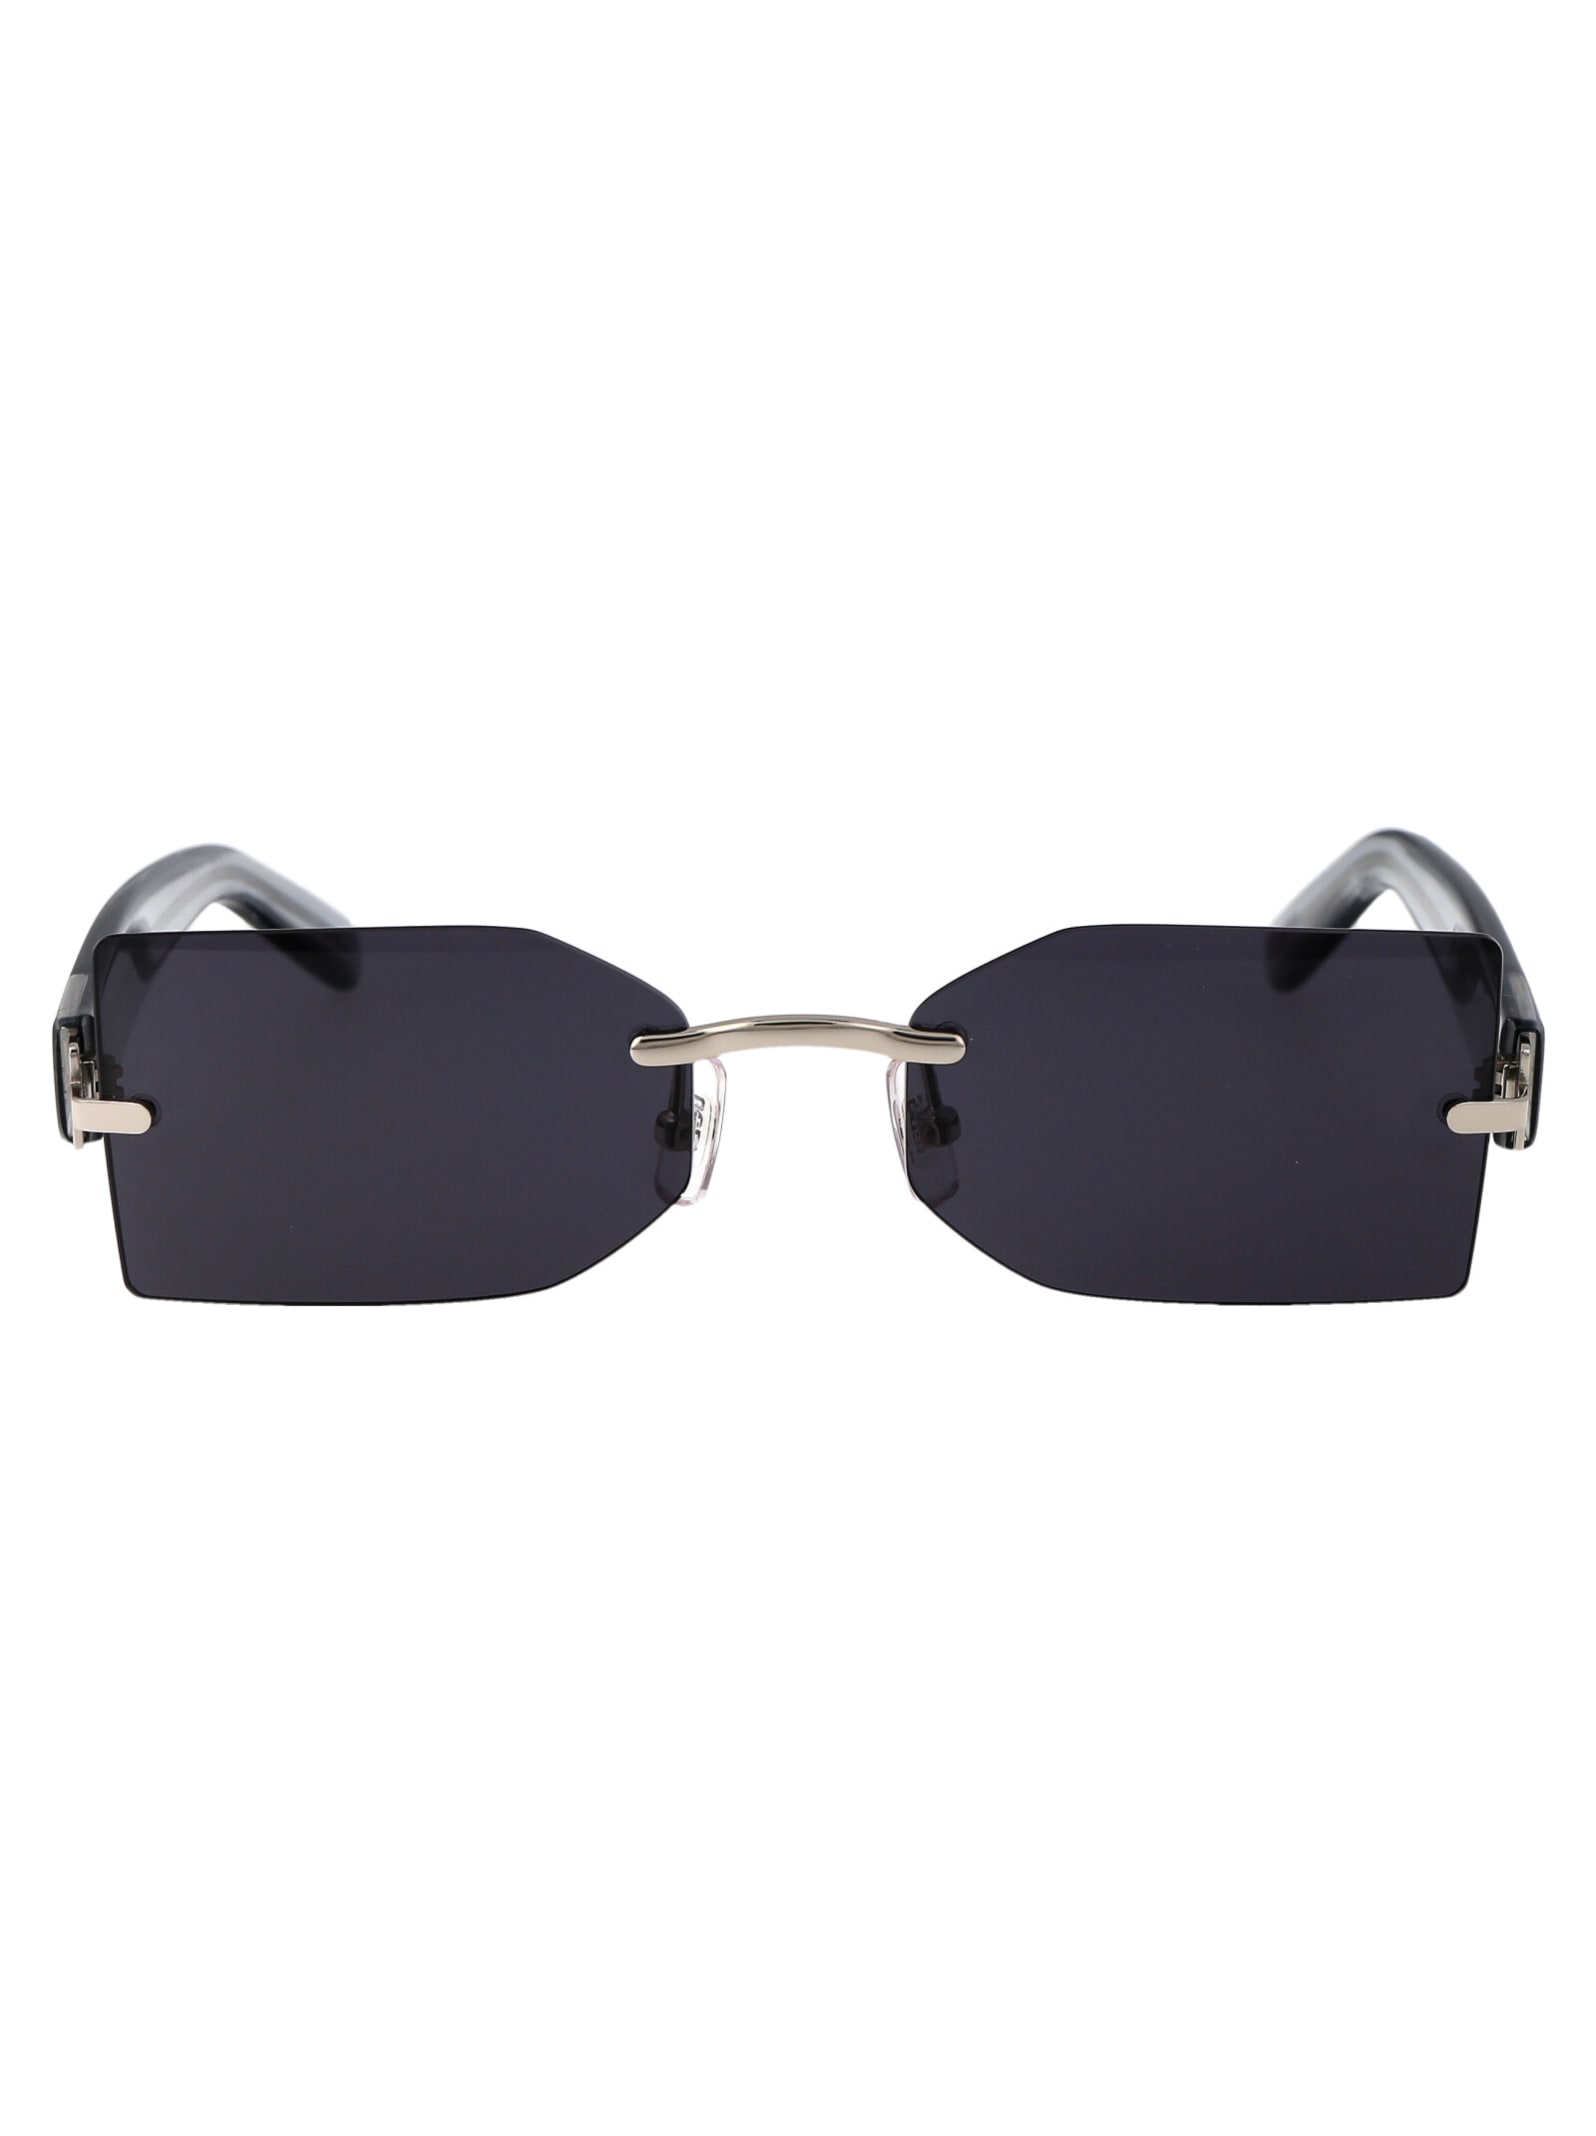 Gd0033 Sunglasses